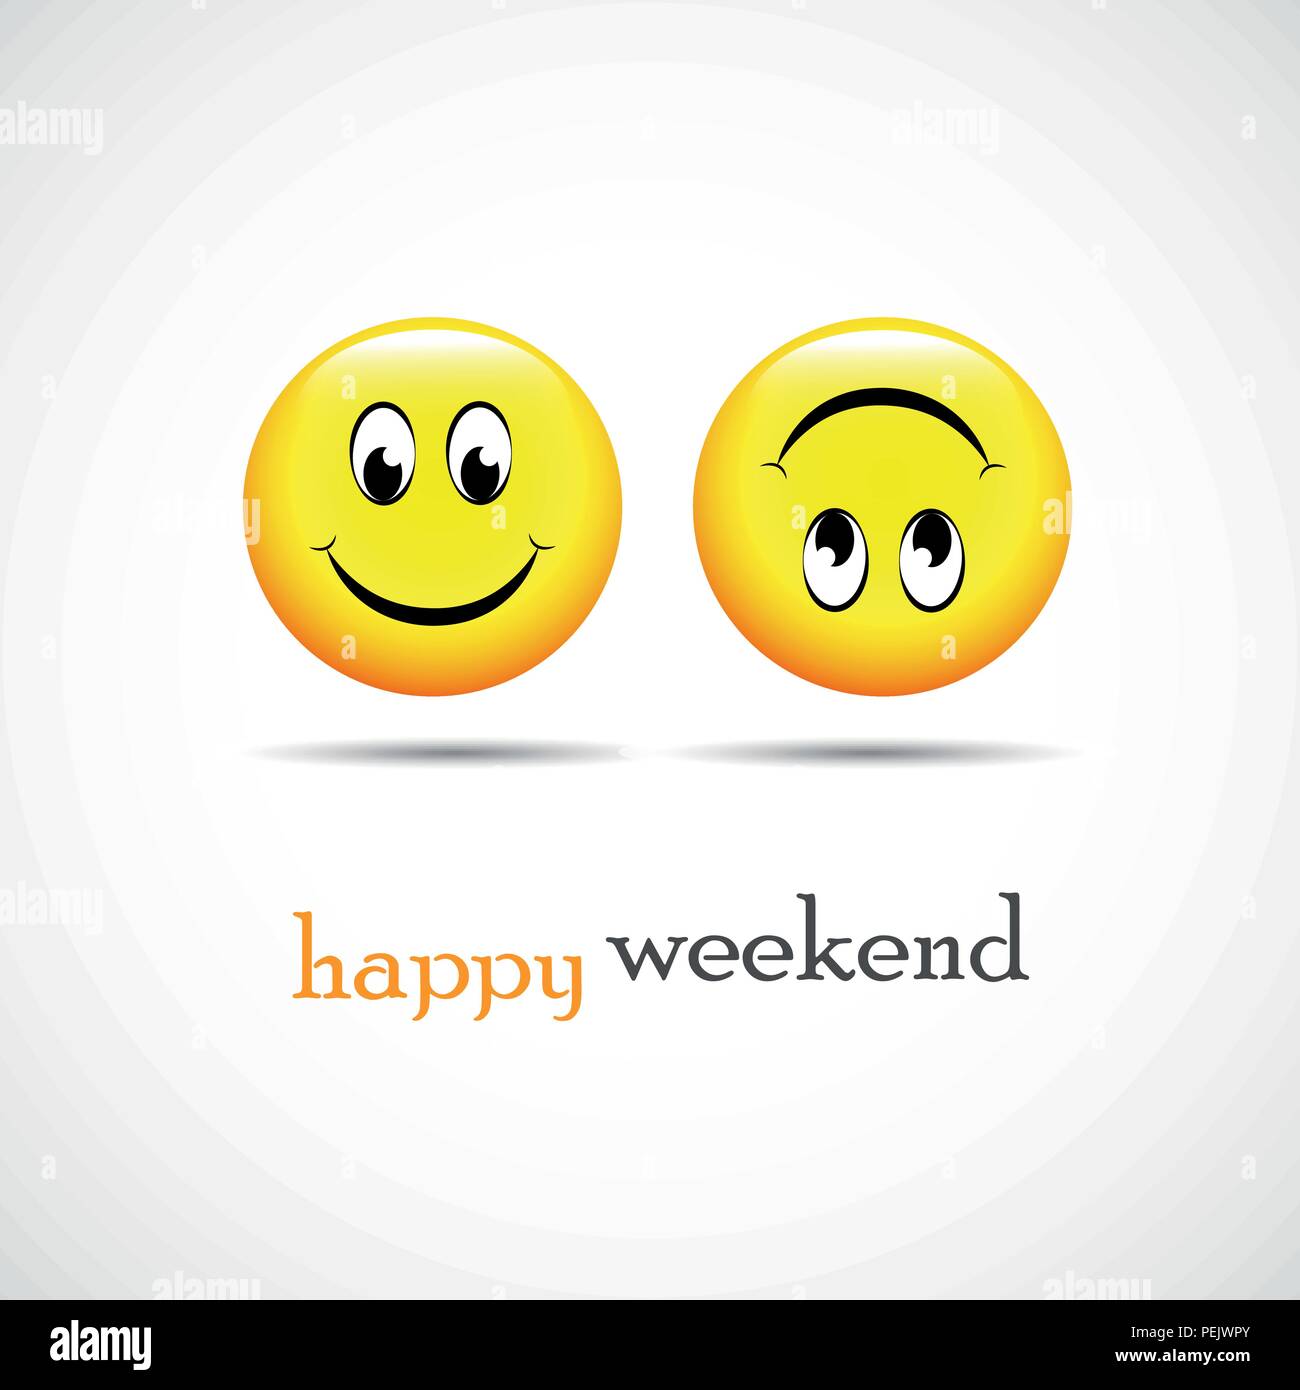 loading weekend happy smileys vector illustration EPS10 Stock Vector